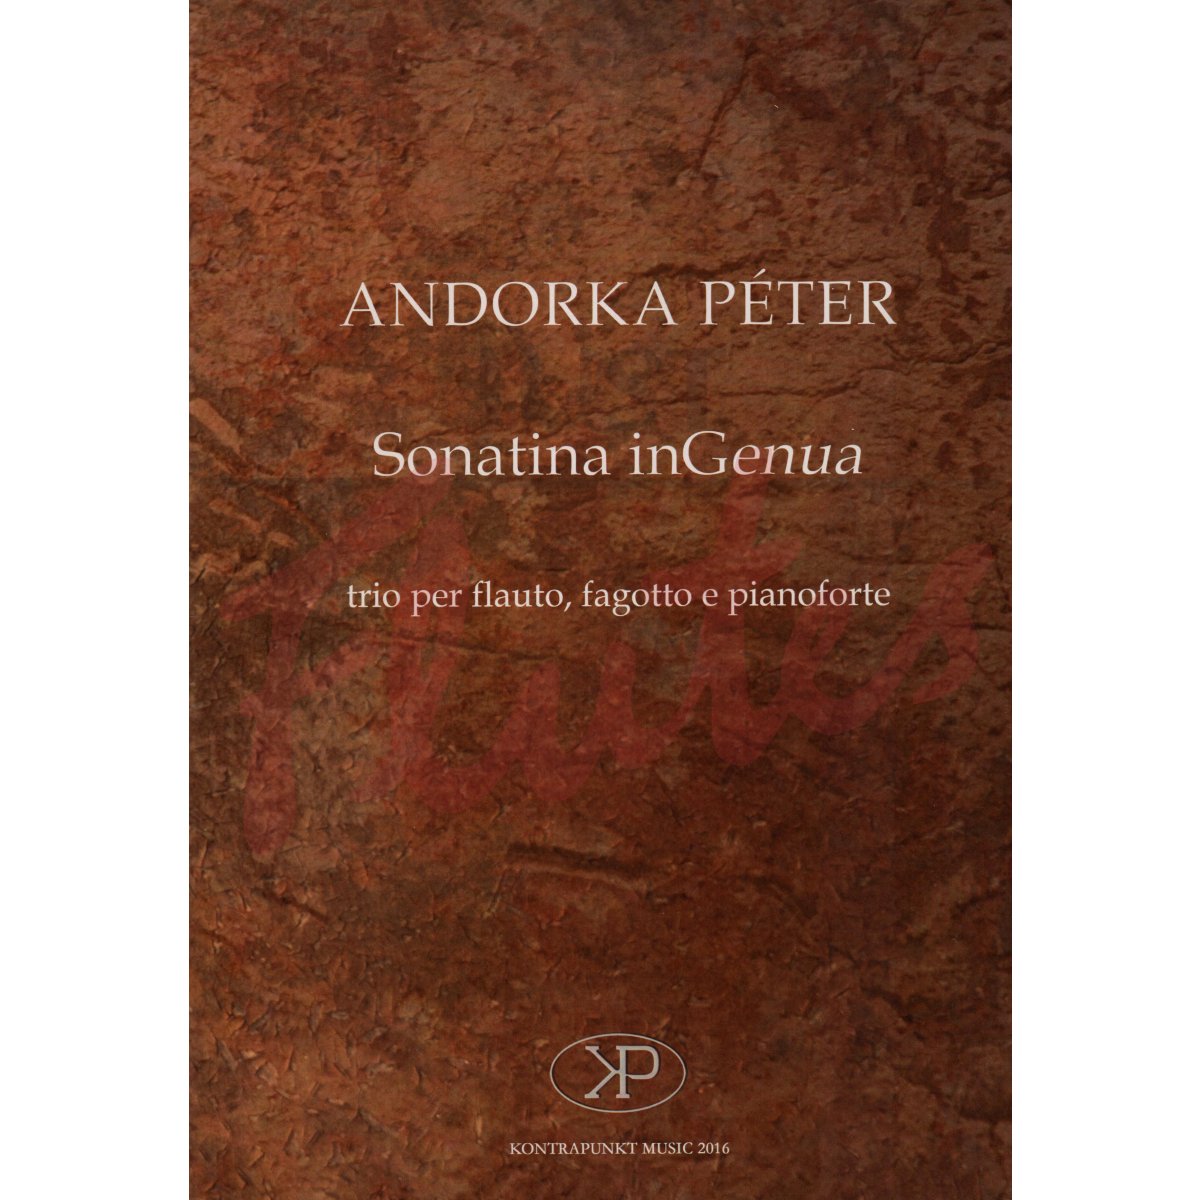 Sonatina inGenua for Flute, Bassoon and Piano